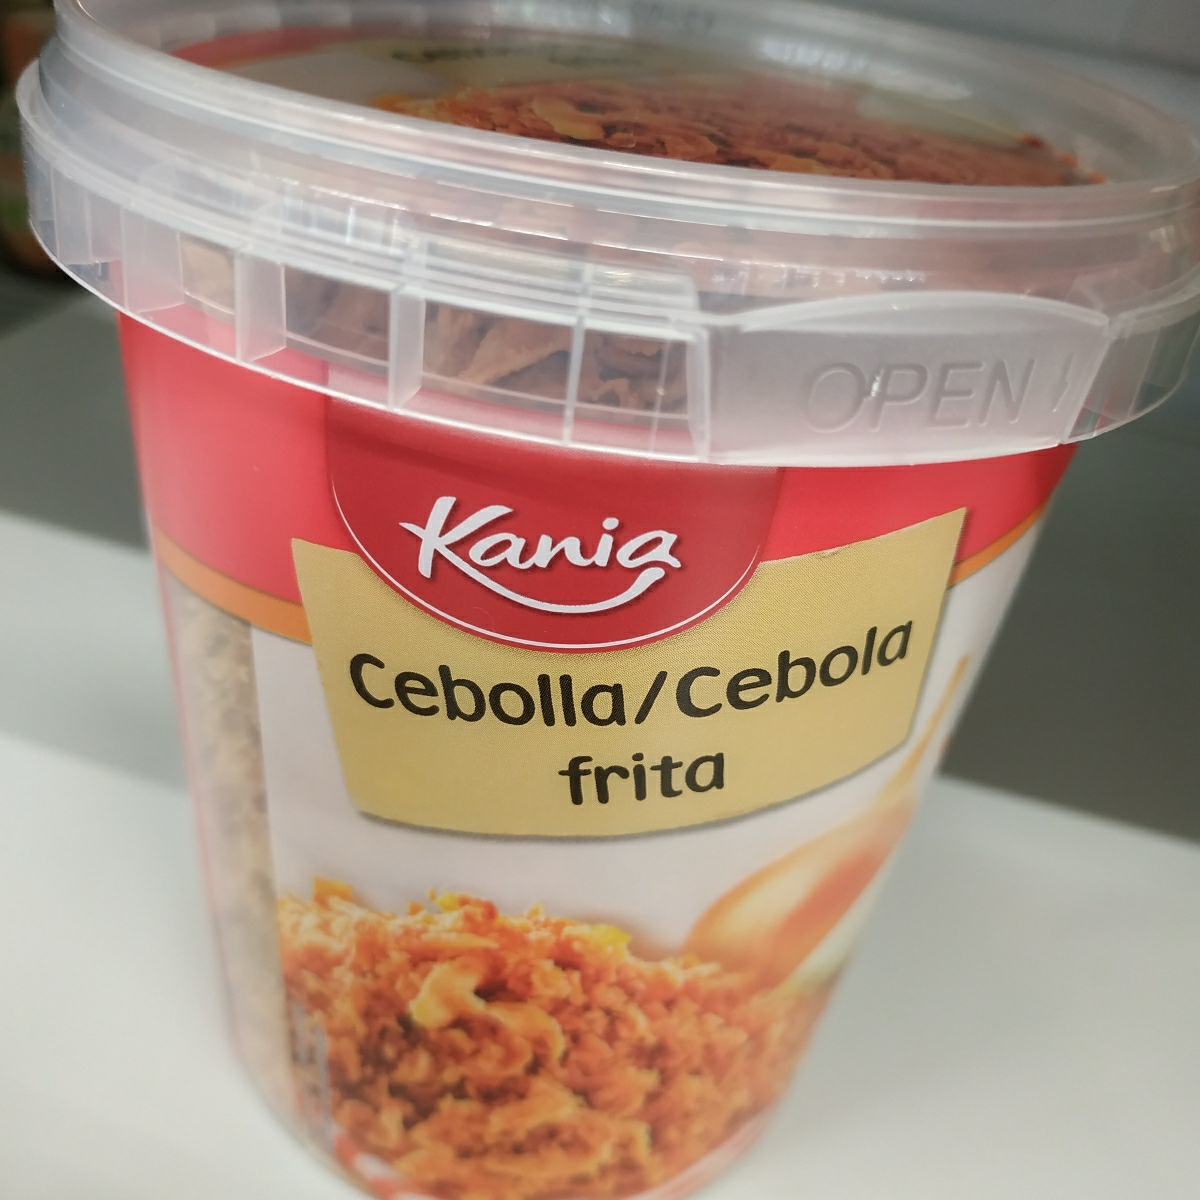 Cebolla frita - Kania - 150g